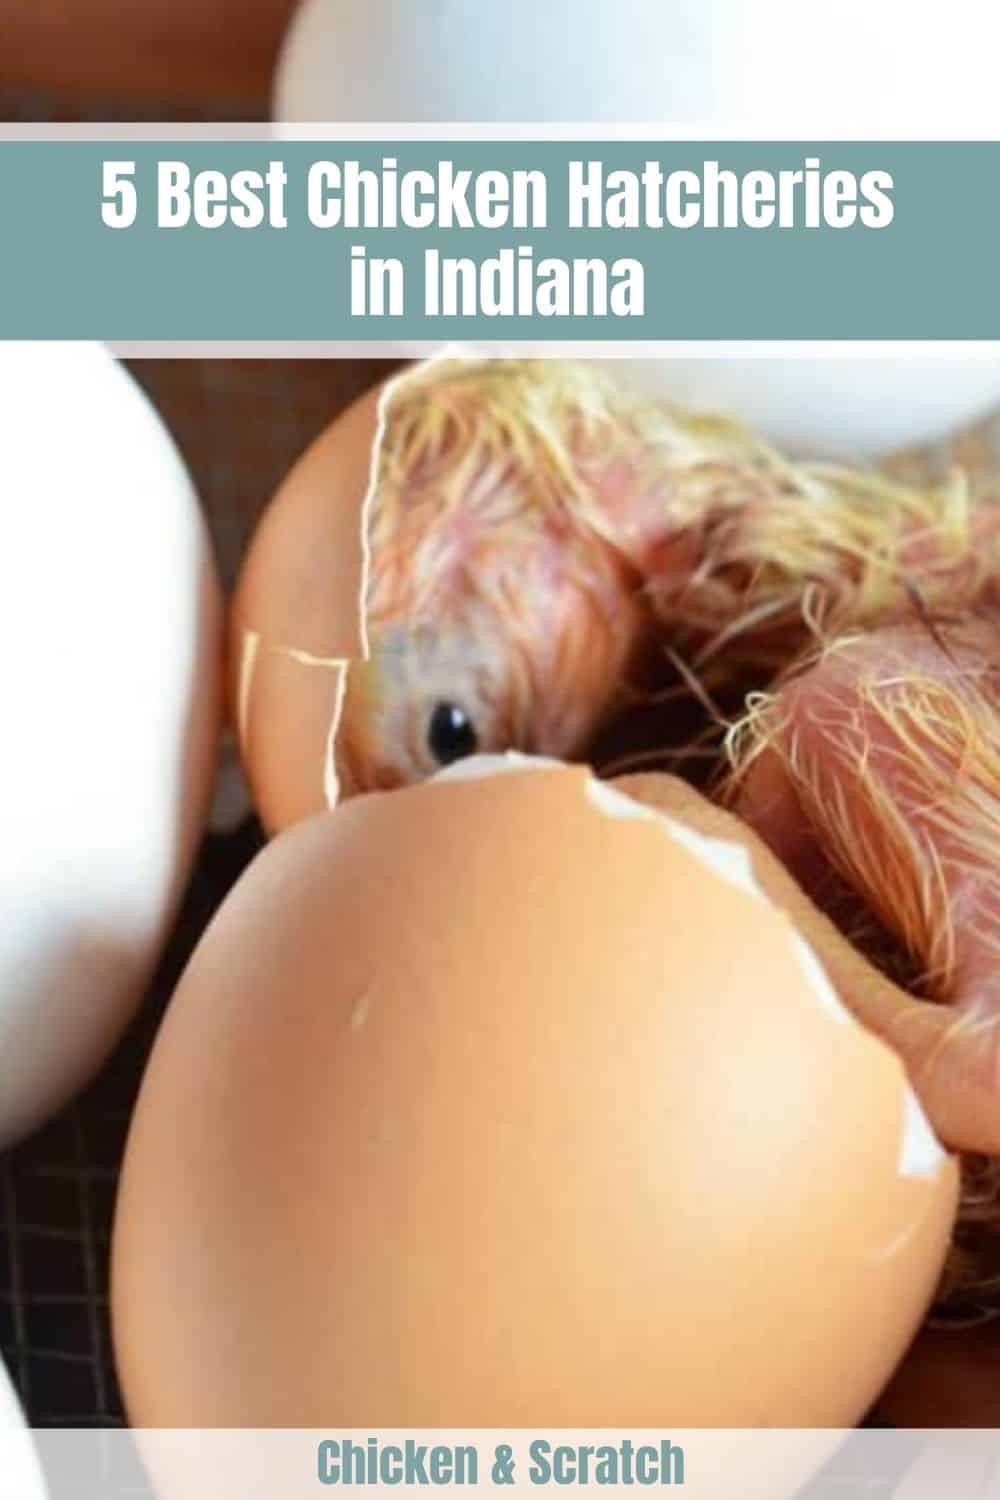 Chicken sale in Indiana